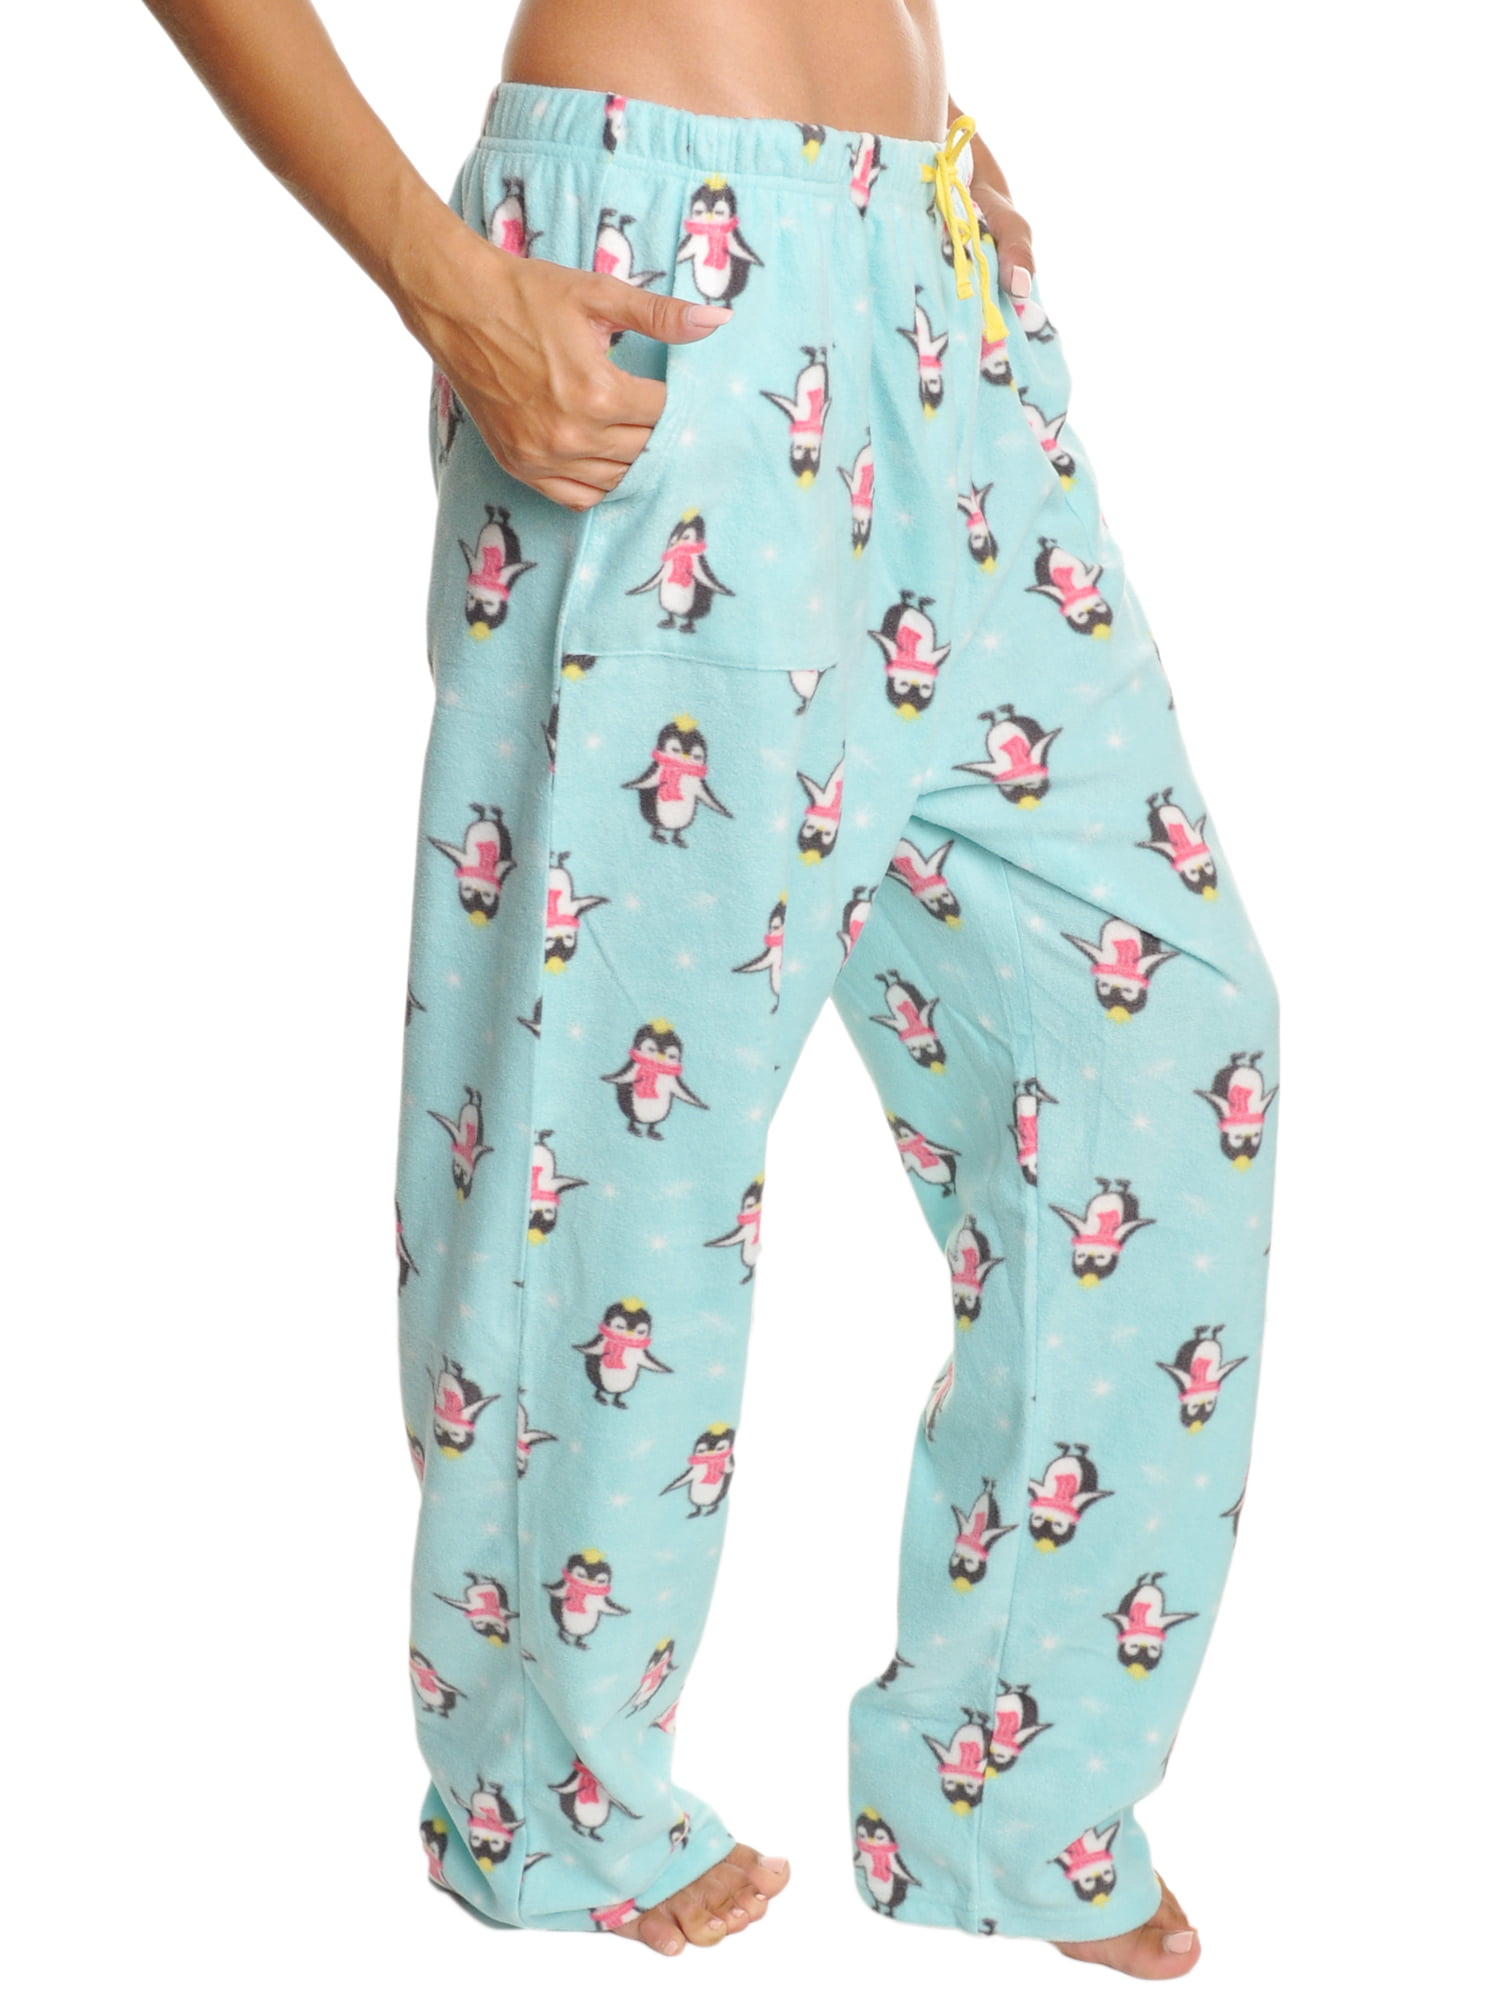 AIDEAONE Girls Pajama Pants Soft Fleece Sleepwear Casual Flannel Pajama Bottoms 5-12 Years 